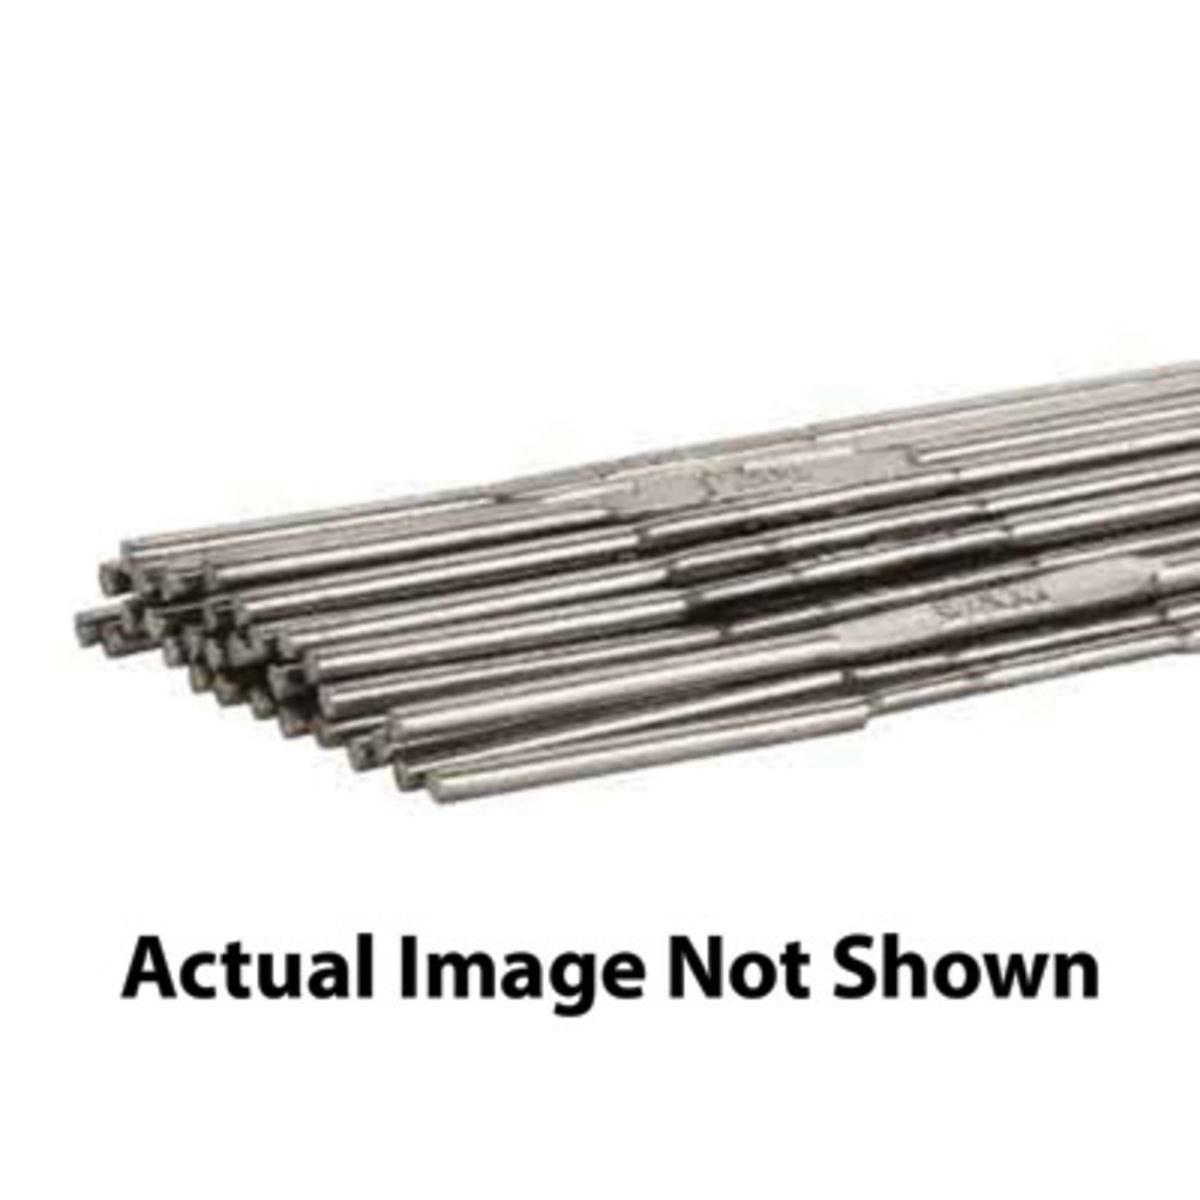 2 Lb KUNWU Stainless Steel TIG Welding Rods ER308L .045 x 36 